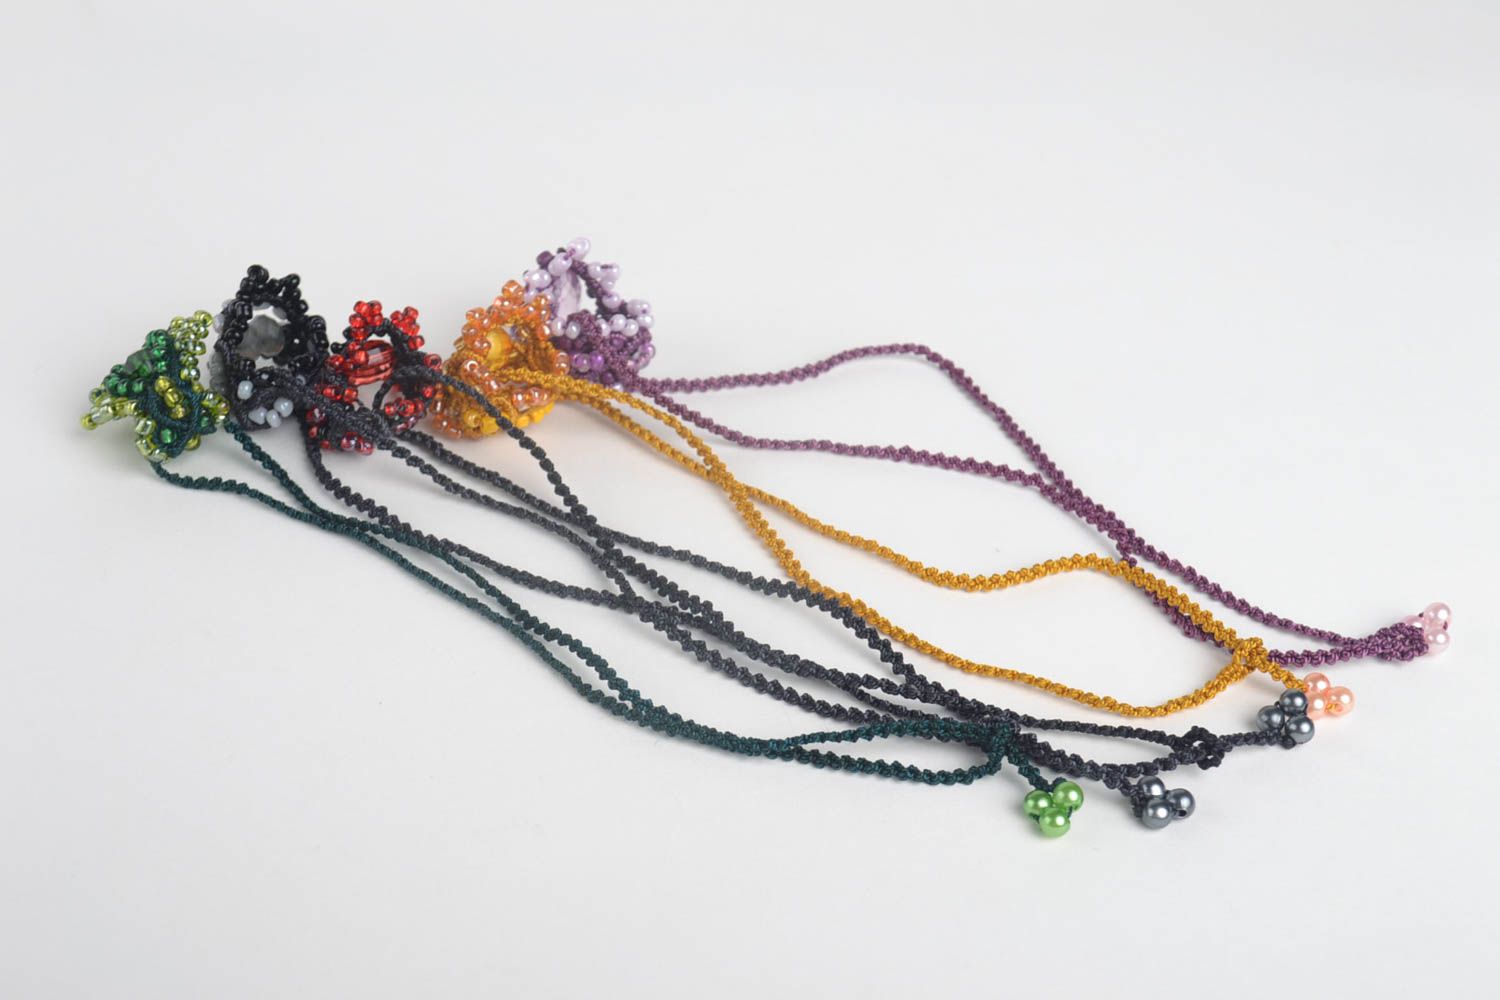 Handmade pendant designer pendant beads pendant macrame pendant set of 5 items photo 3